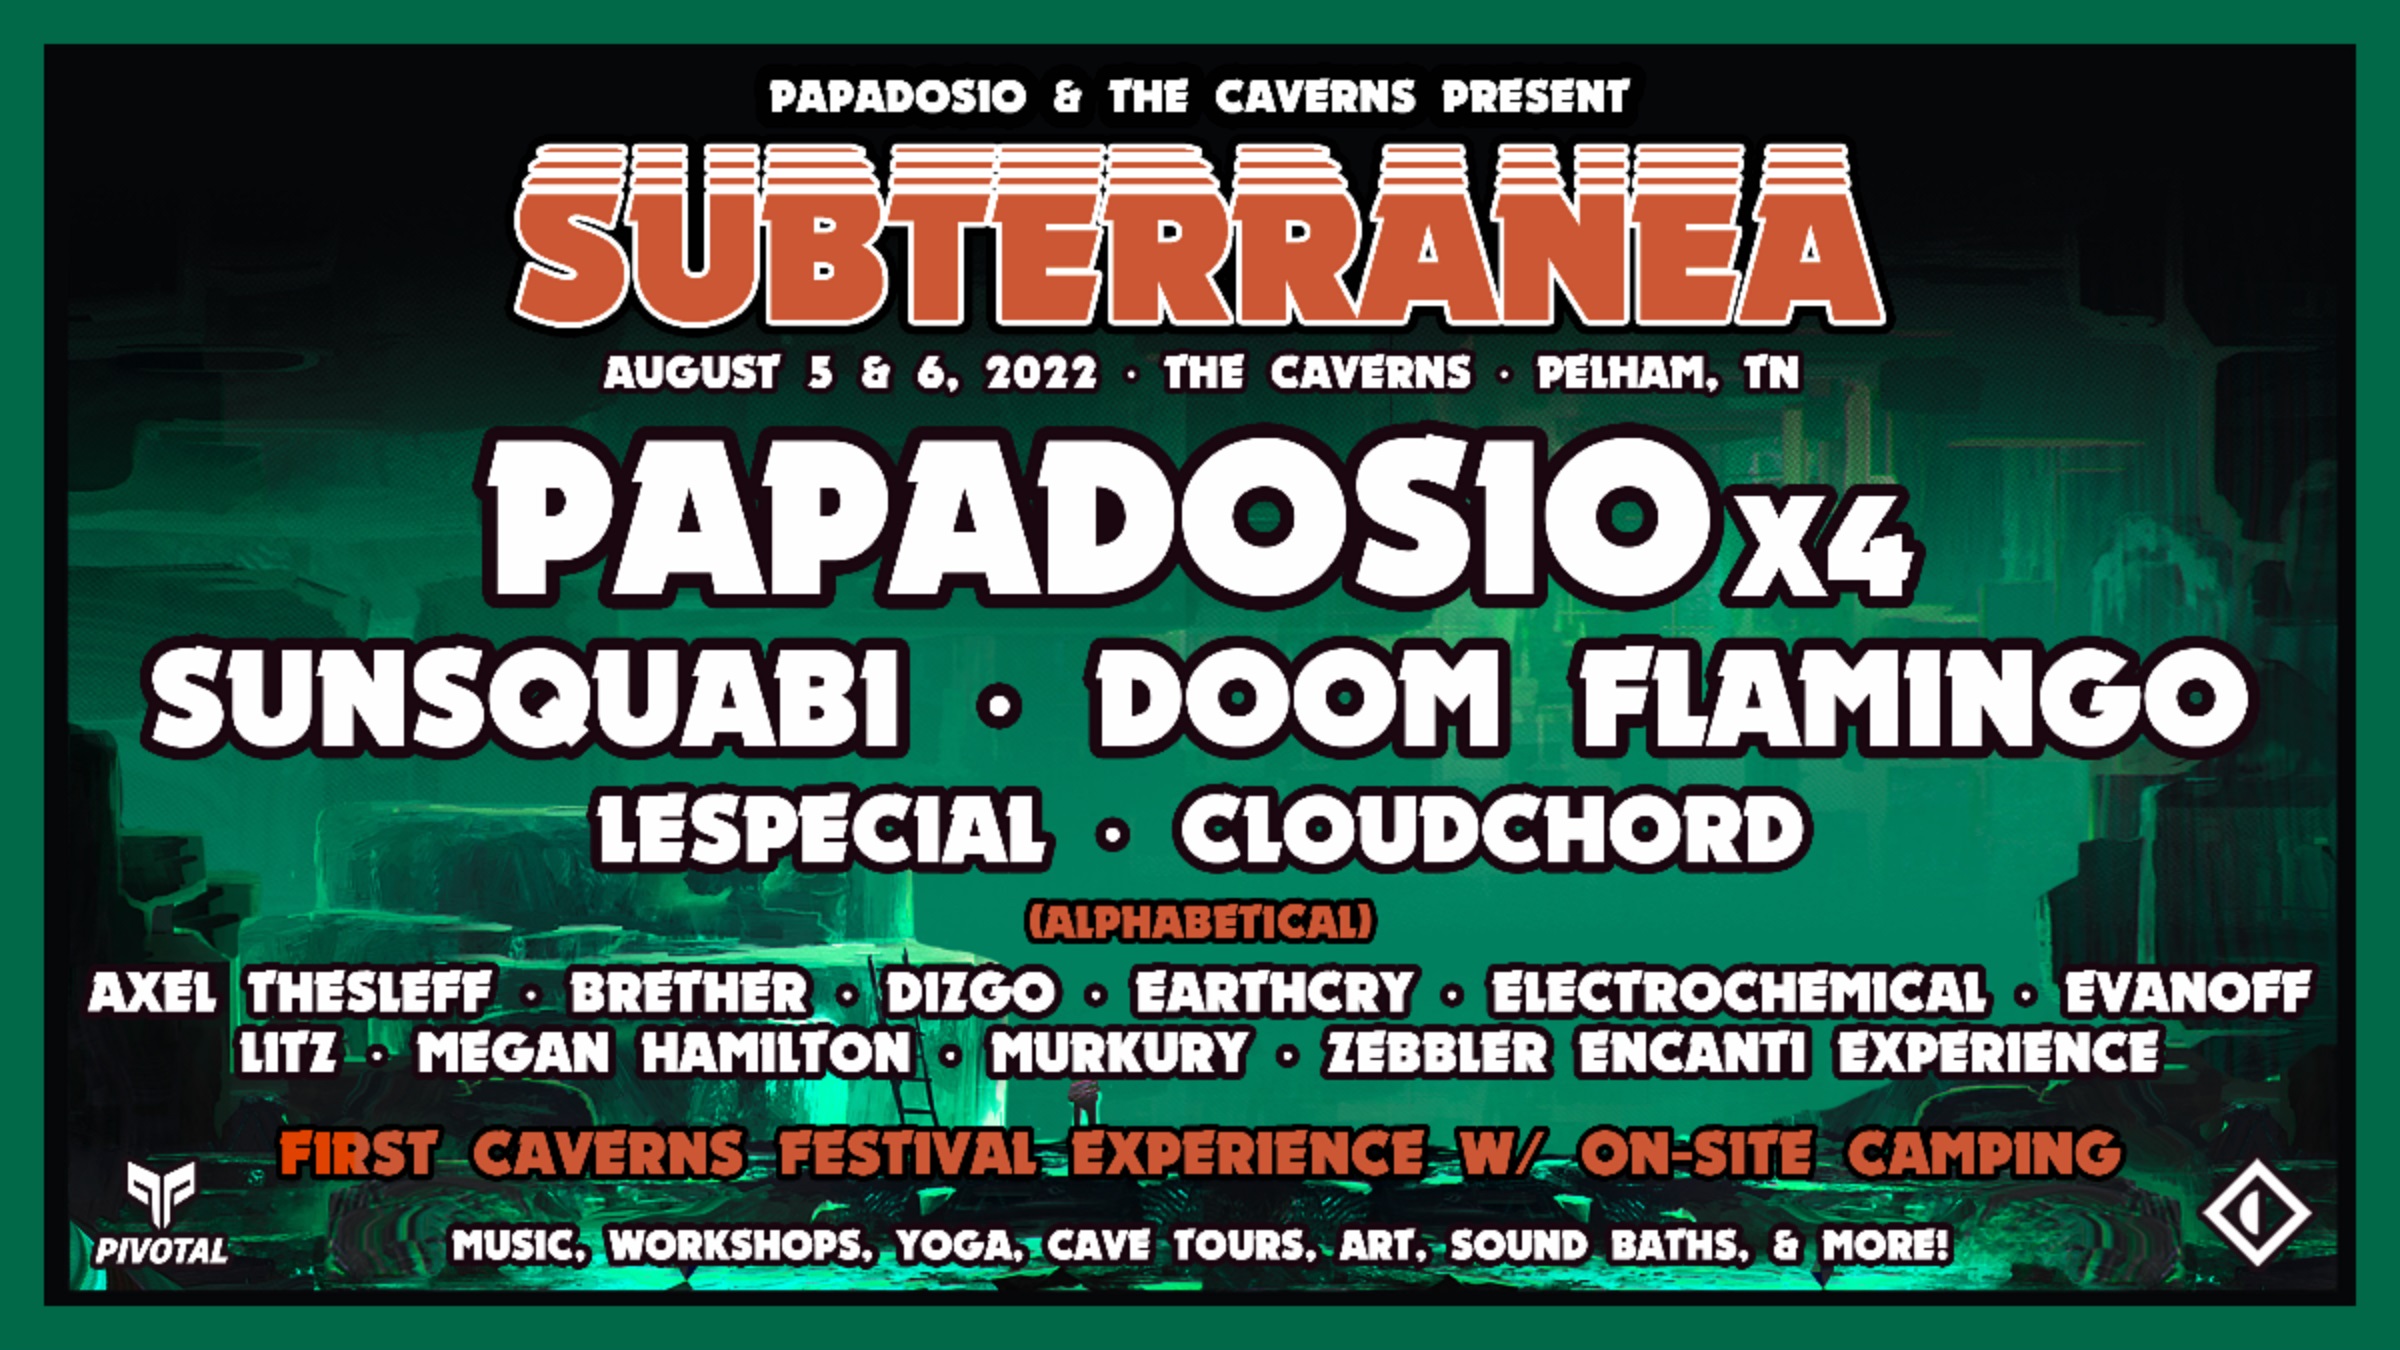 Papadosio & The Caverns Relaunch New Weekend Festival: Subterranea